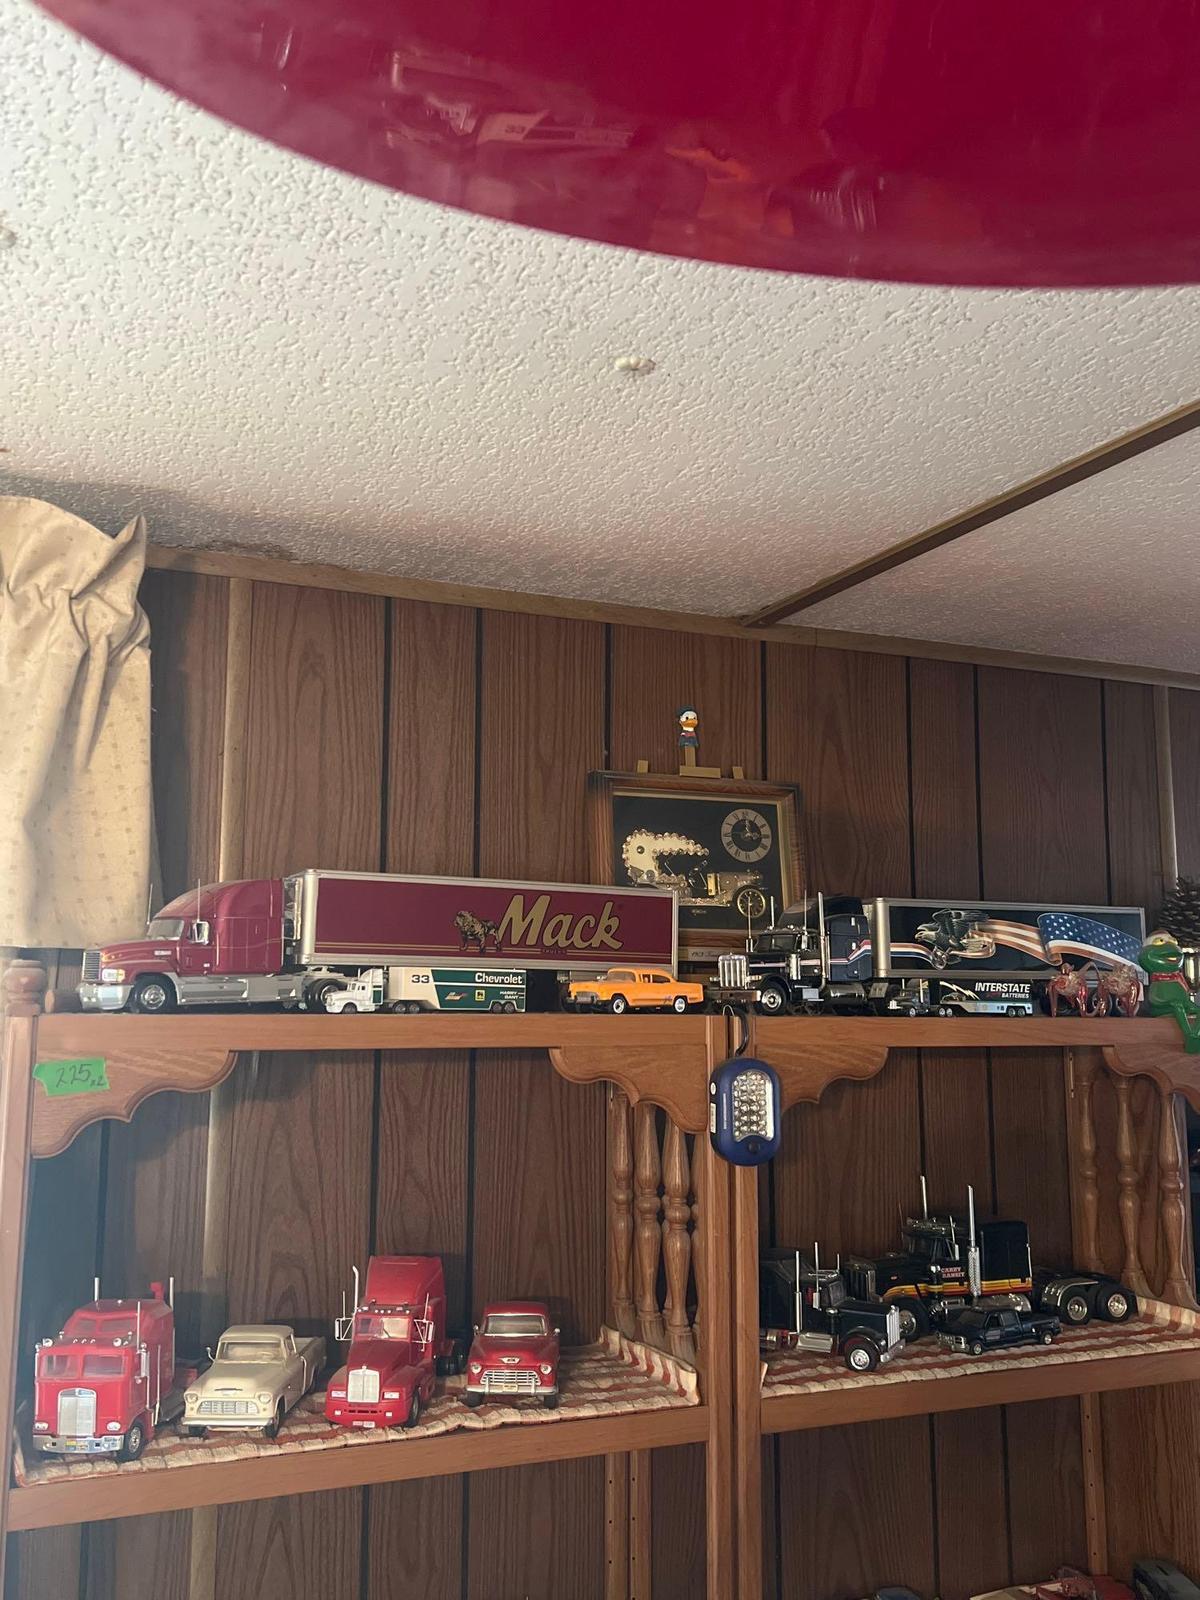 Shelf of collectors semi trucks and knickknacks